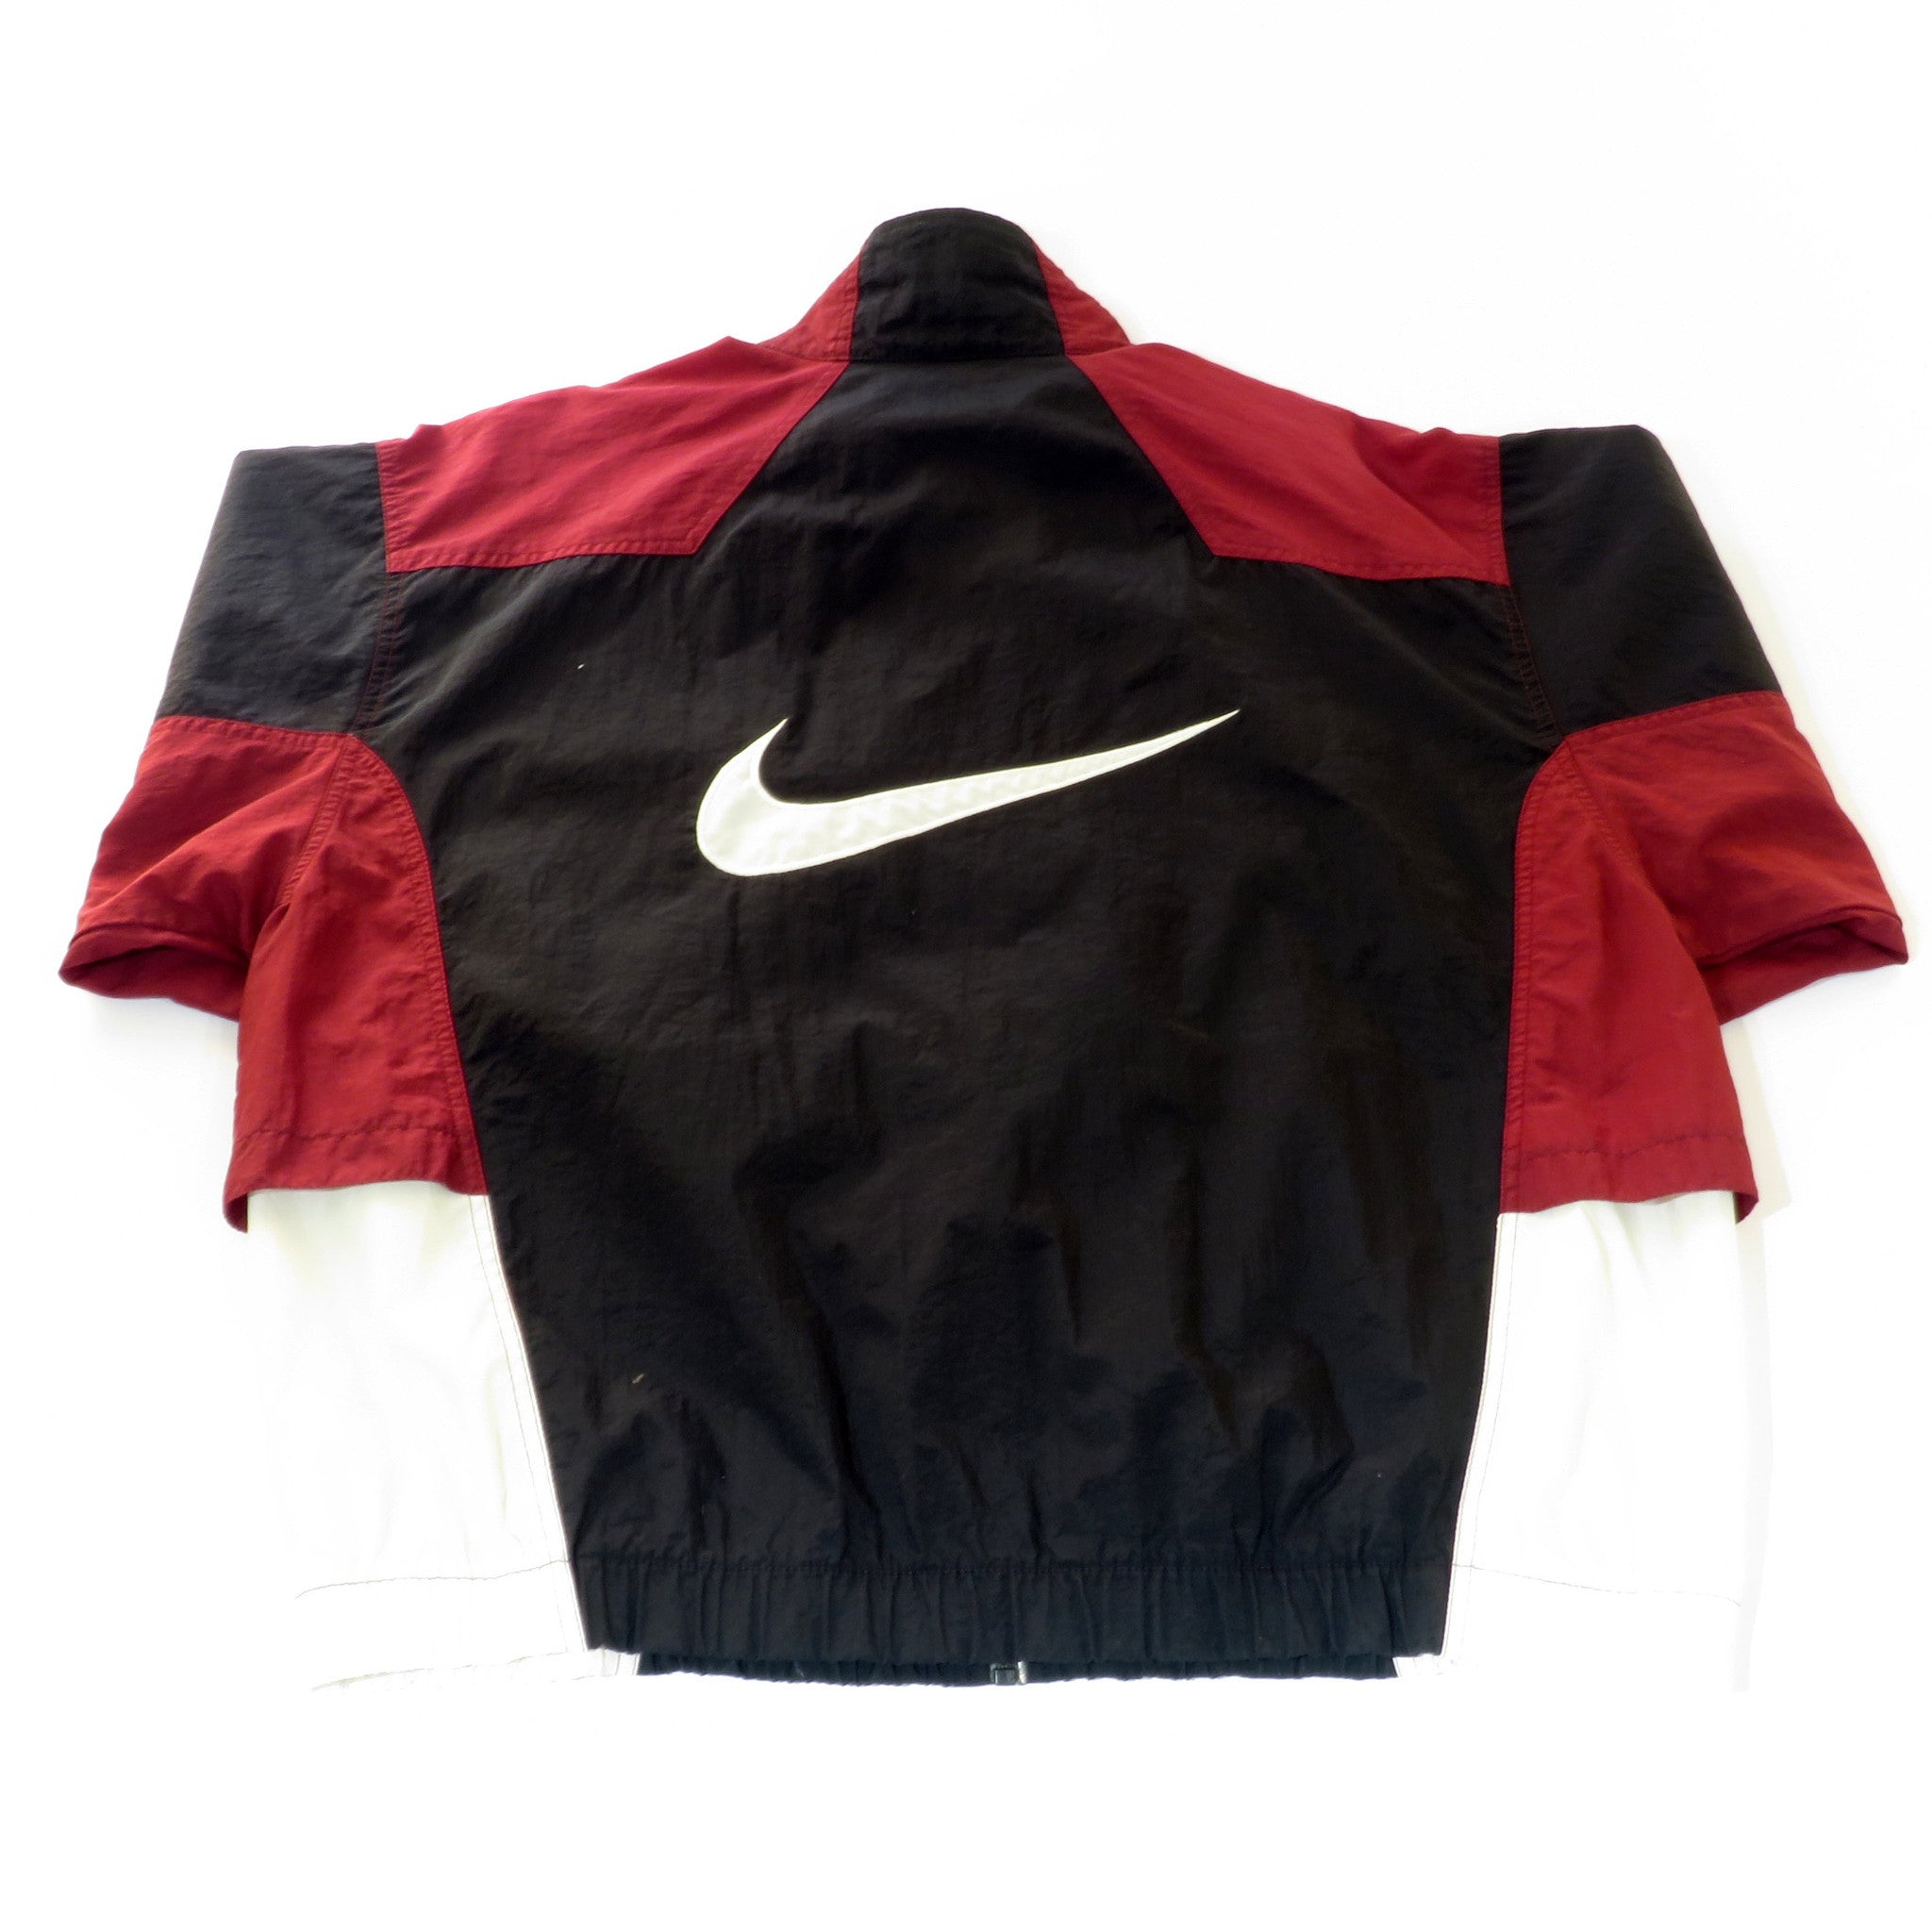 Nike Tri Color Zip Up Windbreaker Jacket Sz L